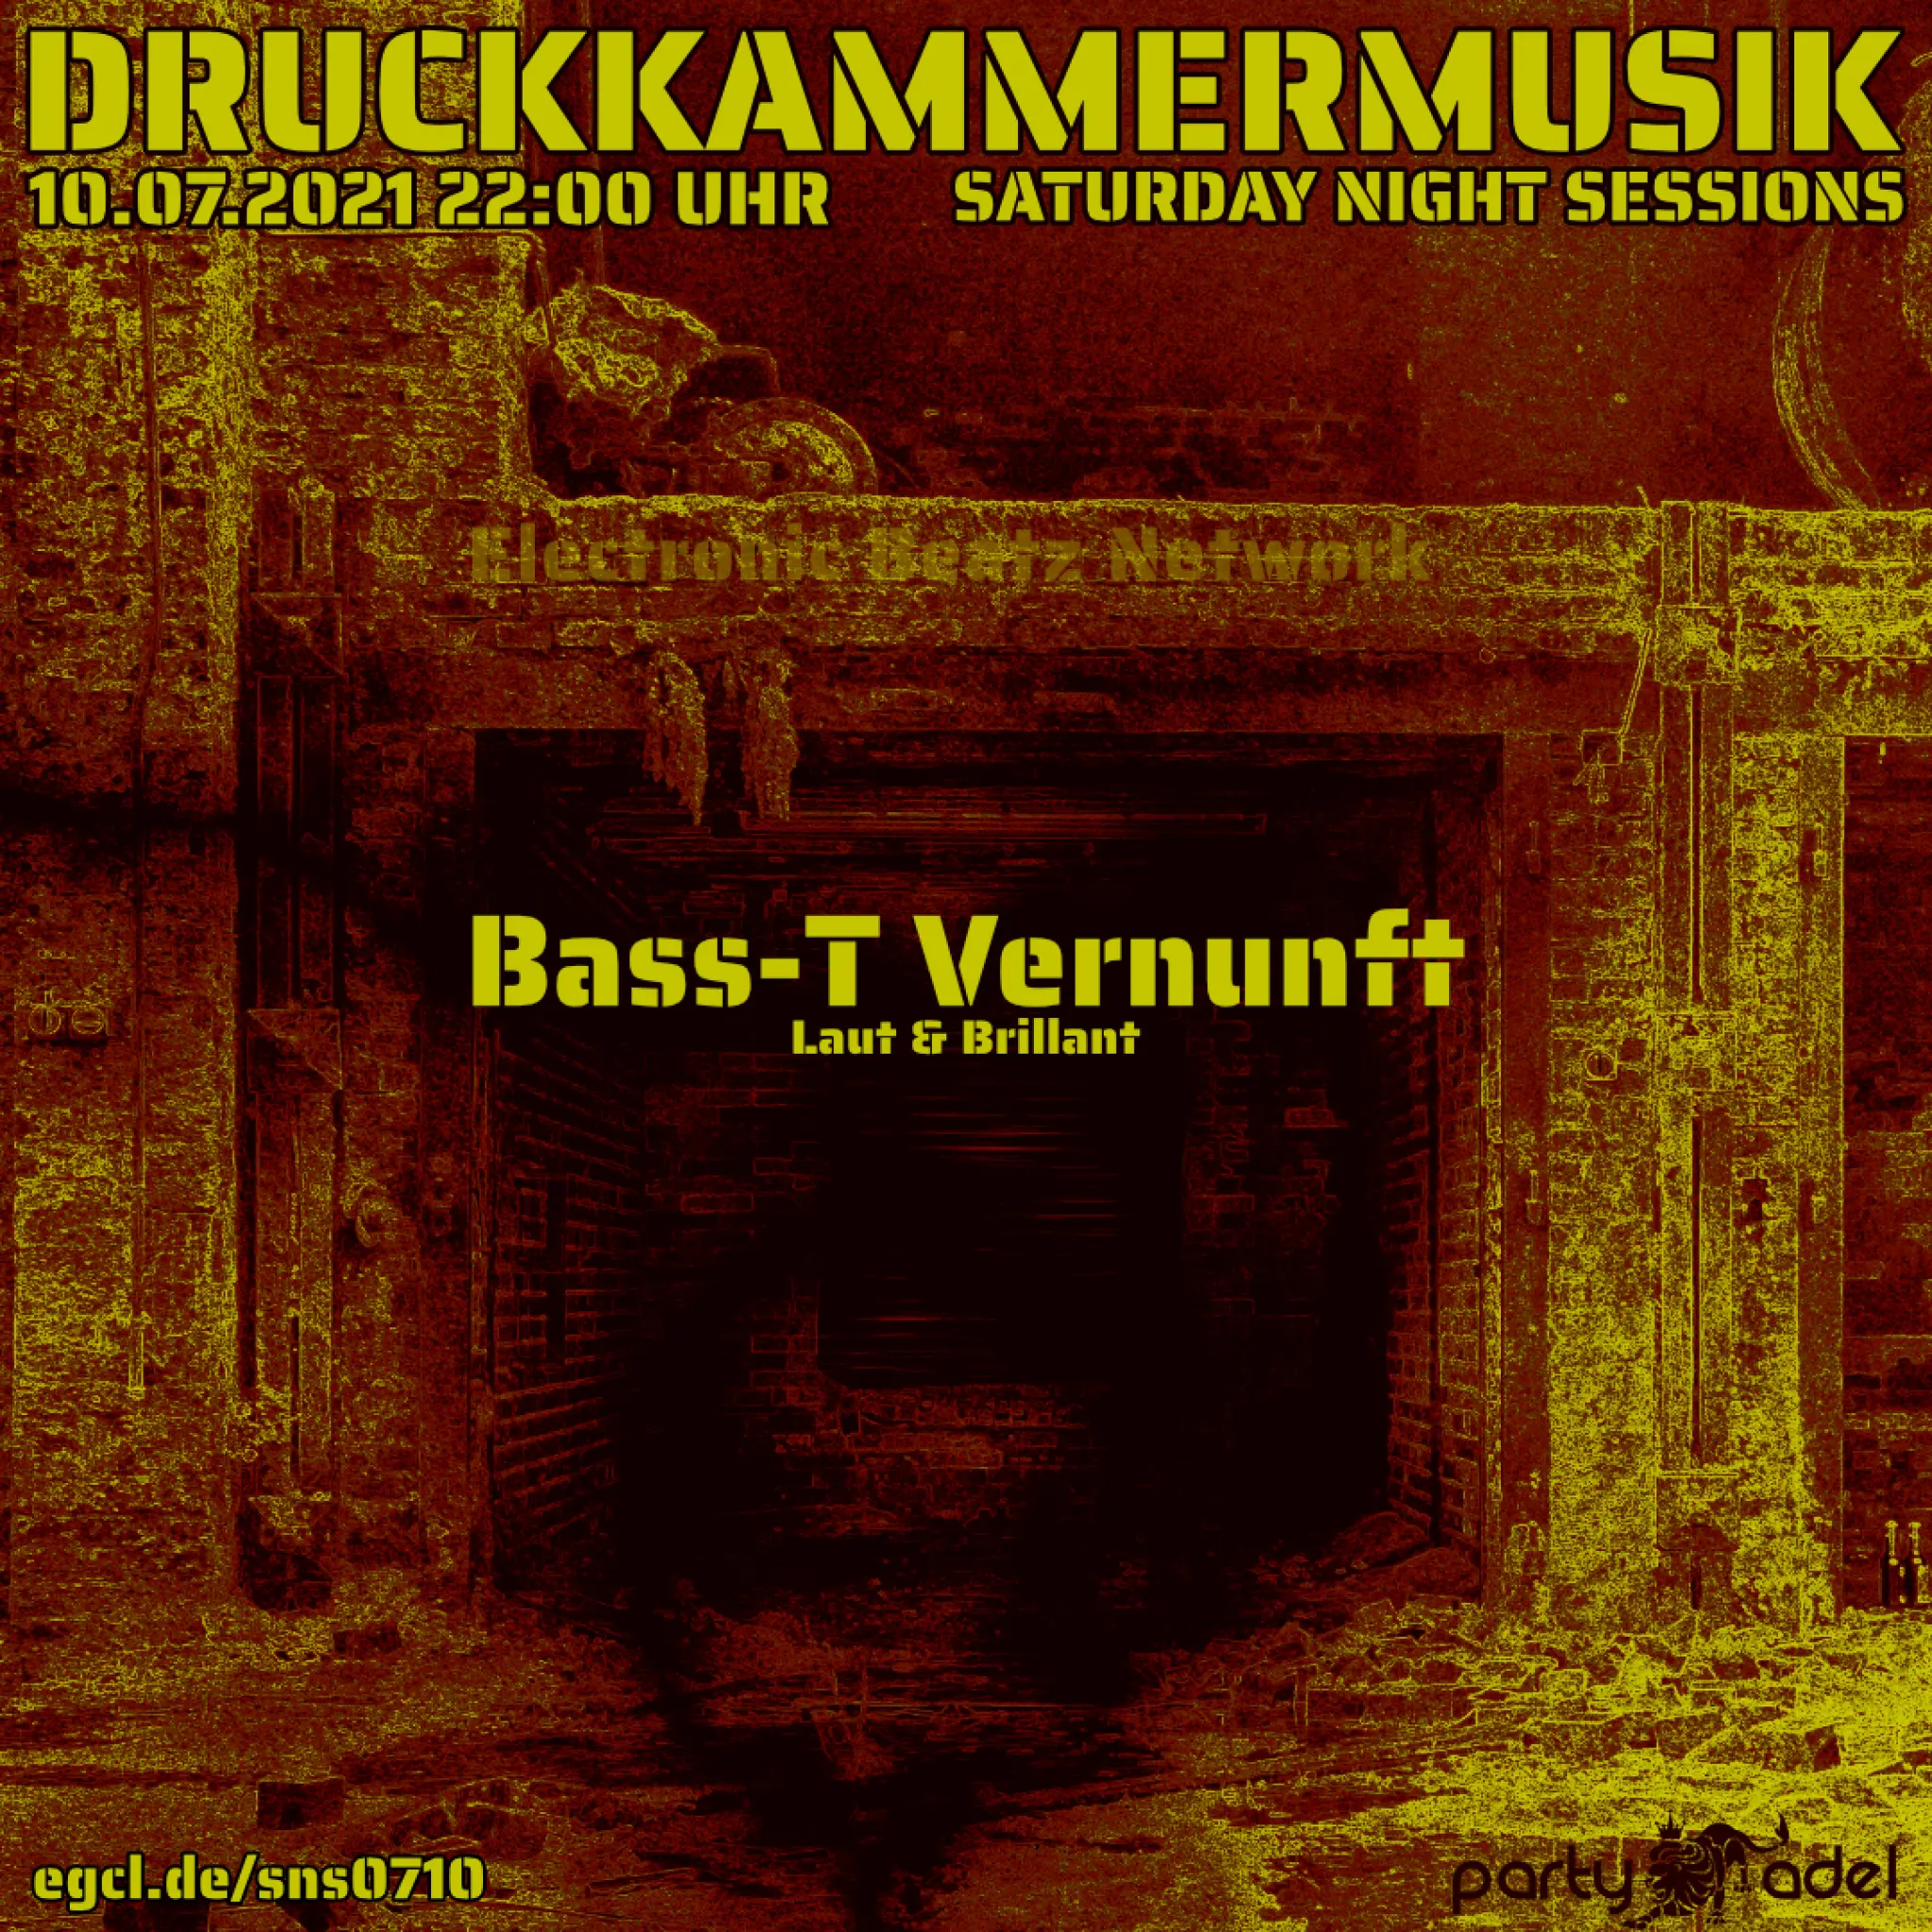 Bass-T Vernunft @ DruckkammerMusik (10.07.2021)